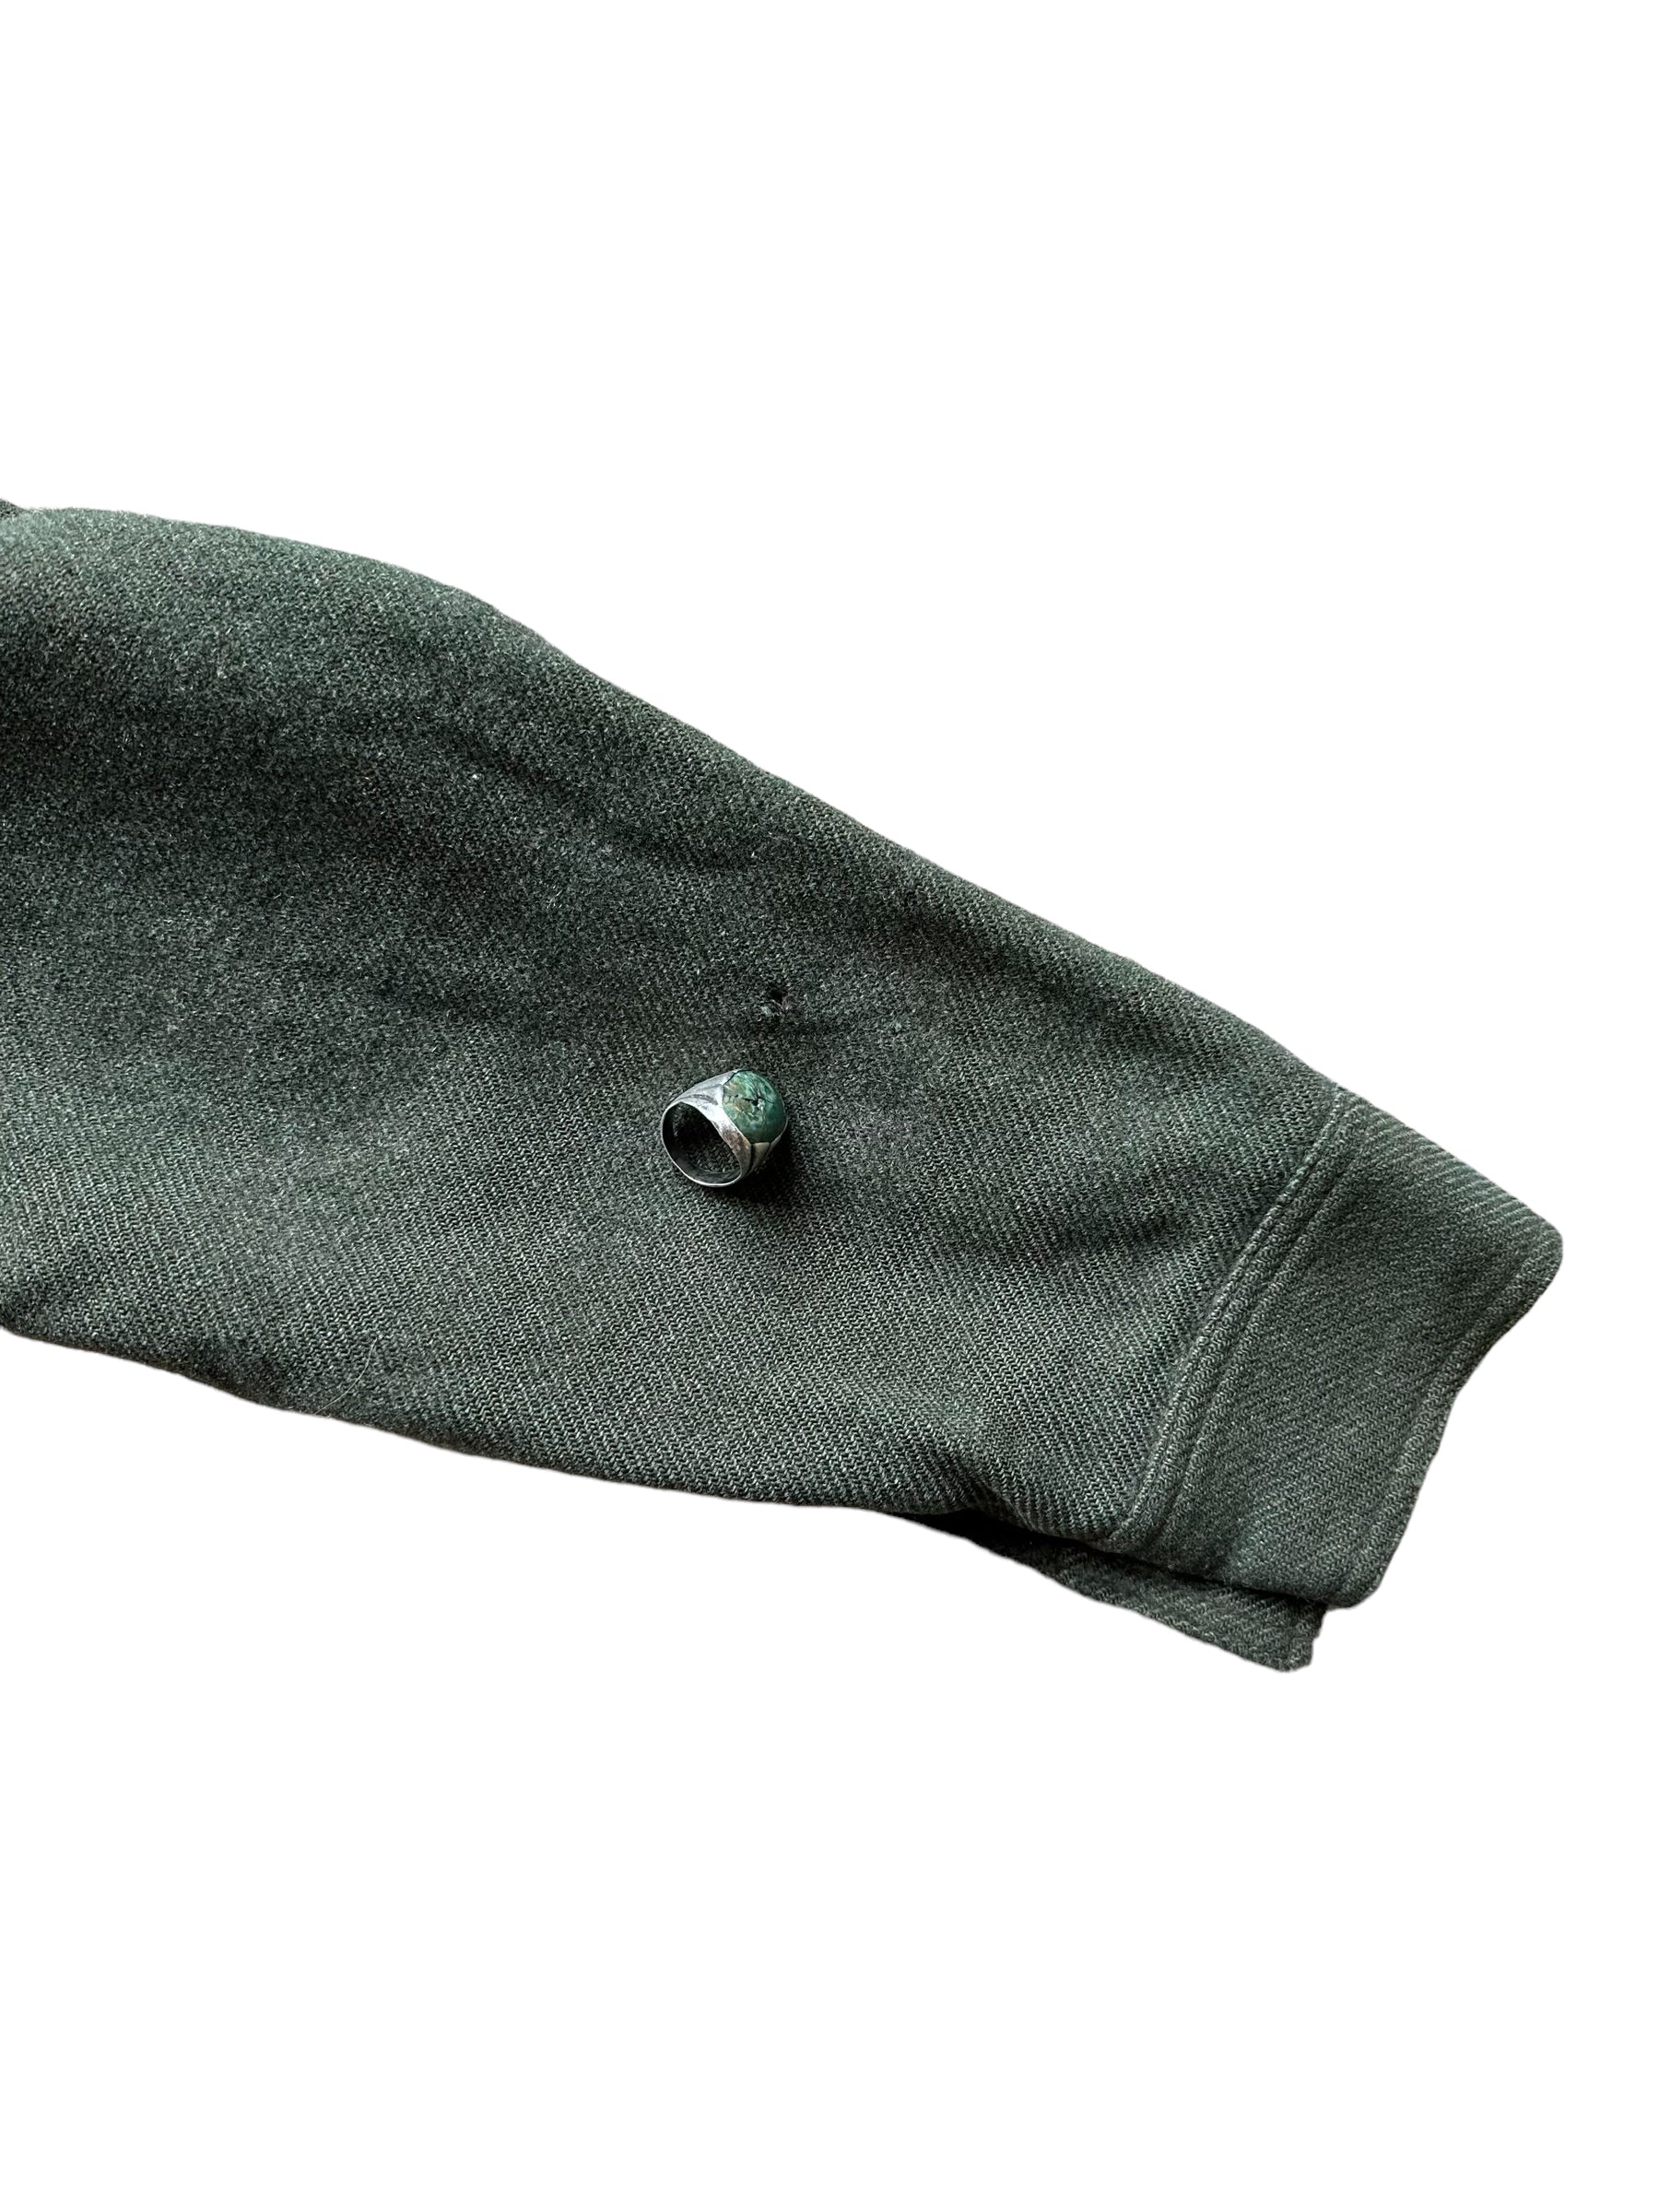 Small Holes on Arm of Vintage Early 70s Filson Herringbone Green Cape Coat SZ 46 |  Vintage Filson Cape Coat | Vintage Workwear Seattle